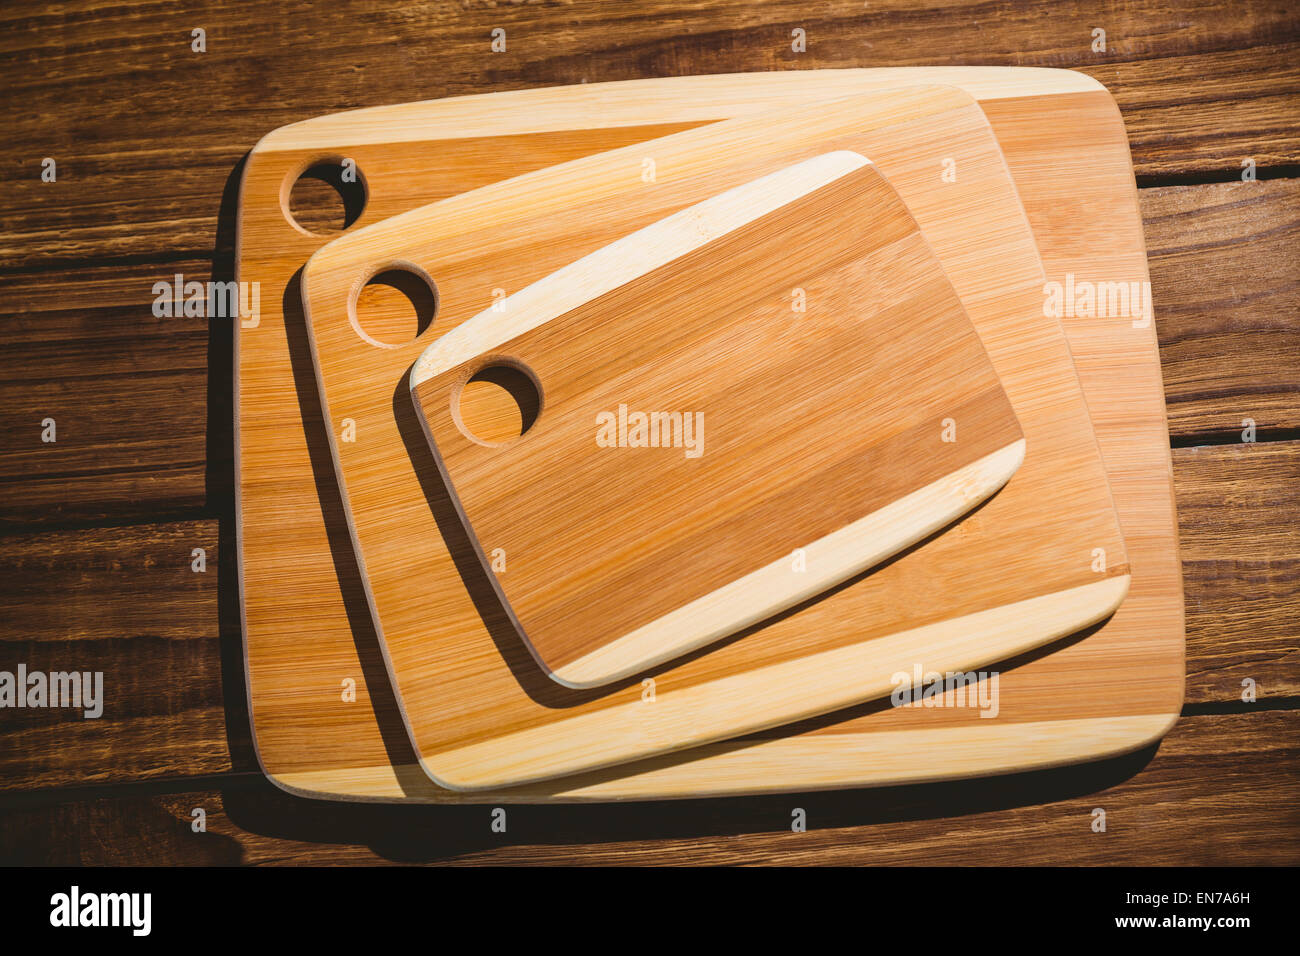 https://c8.alamy.com/comp/EN7A6H/chopping-boards-on-wooden-table-EN7A6H.jpg